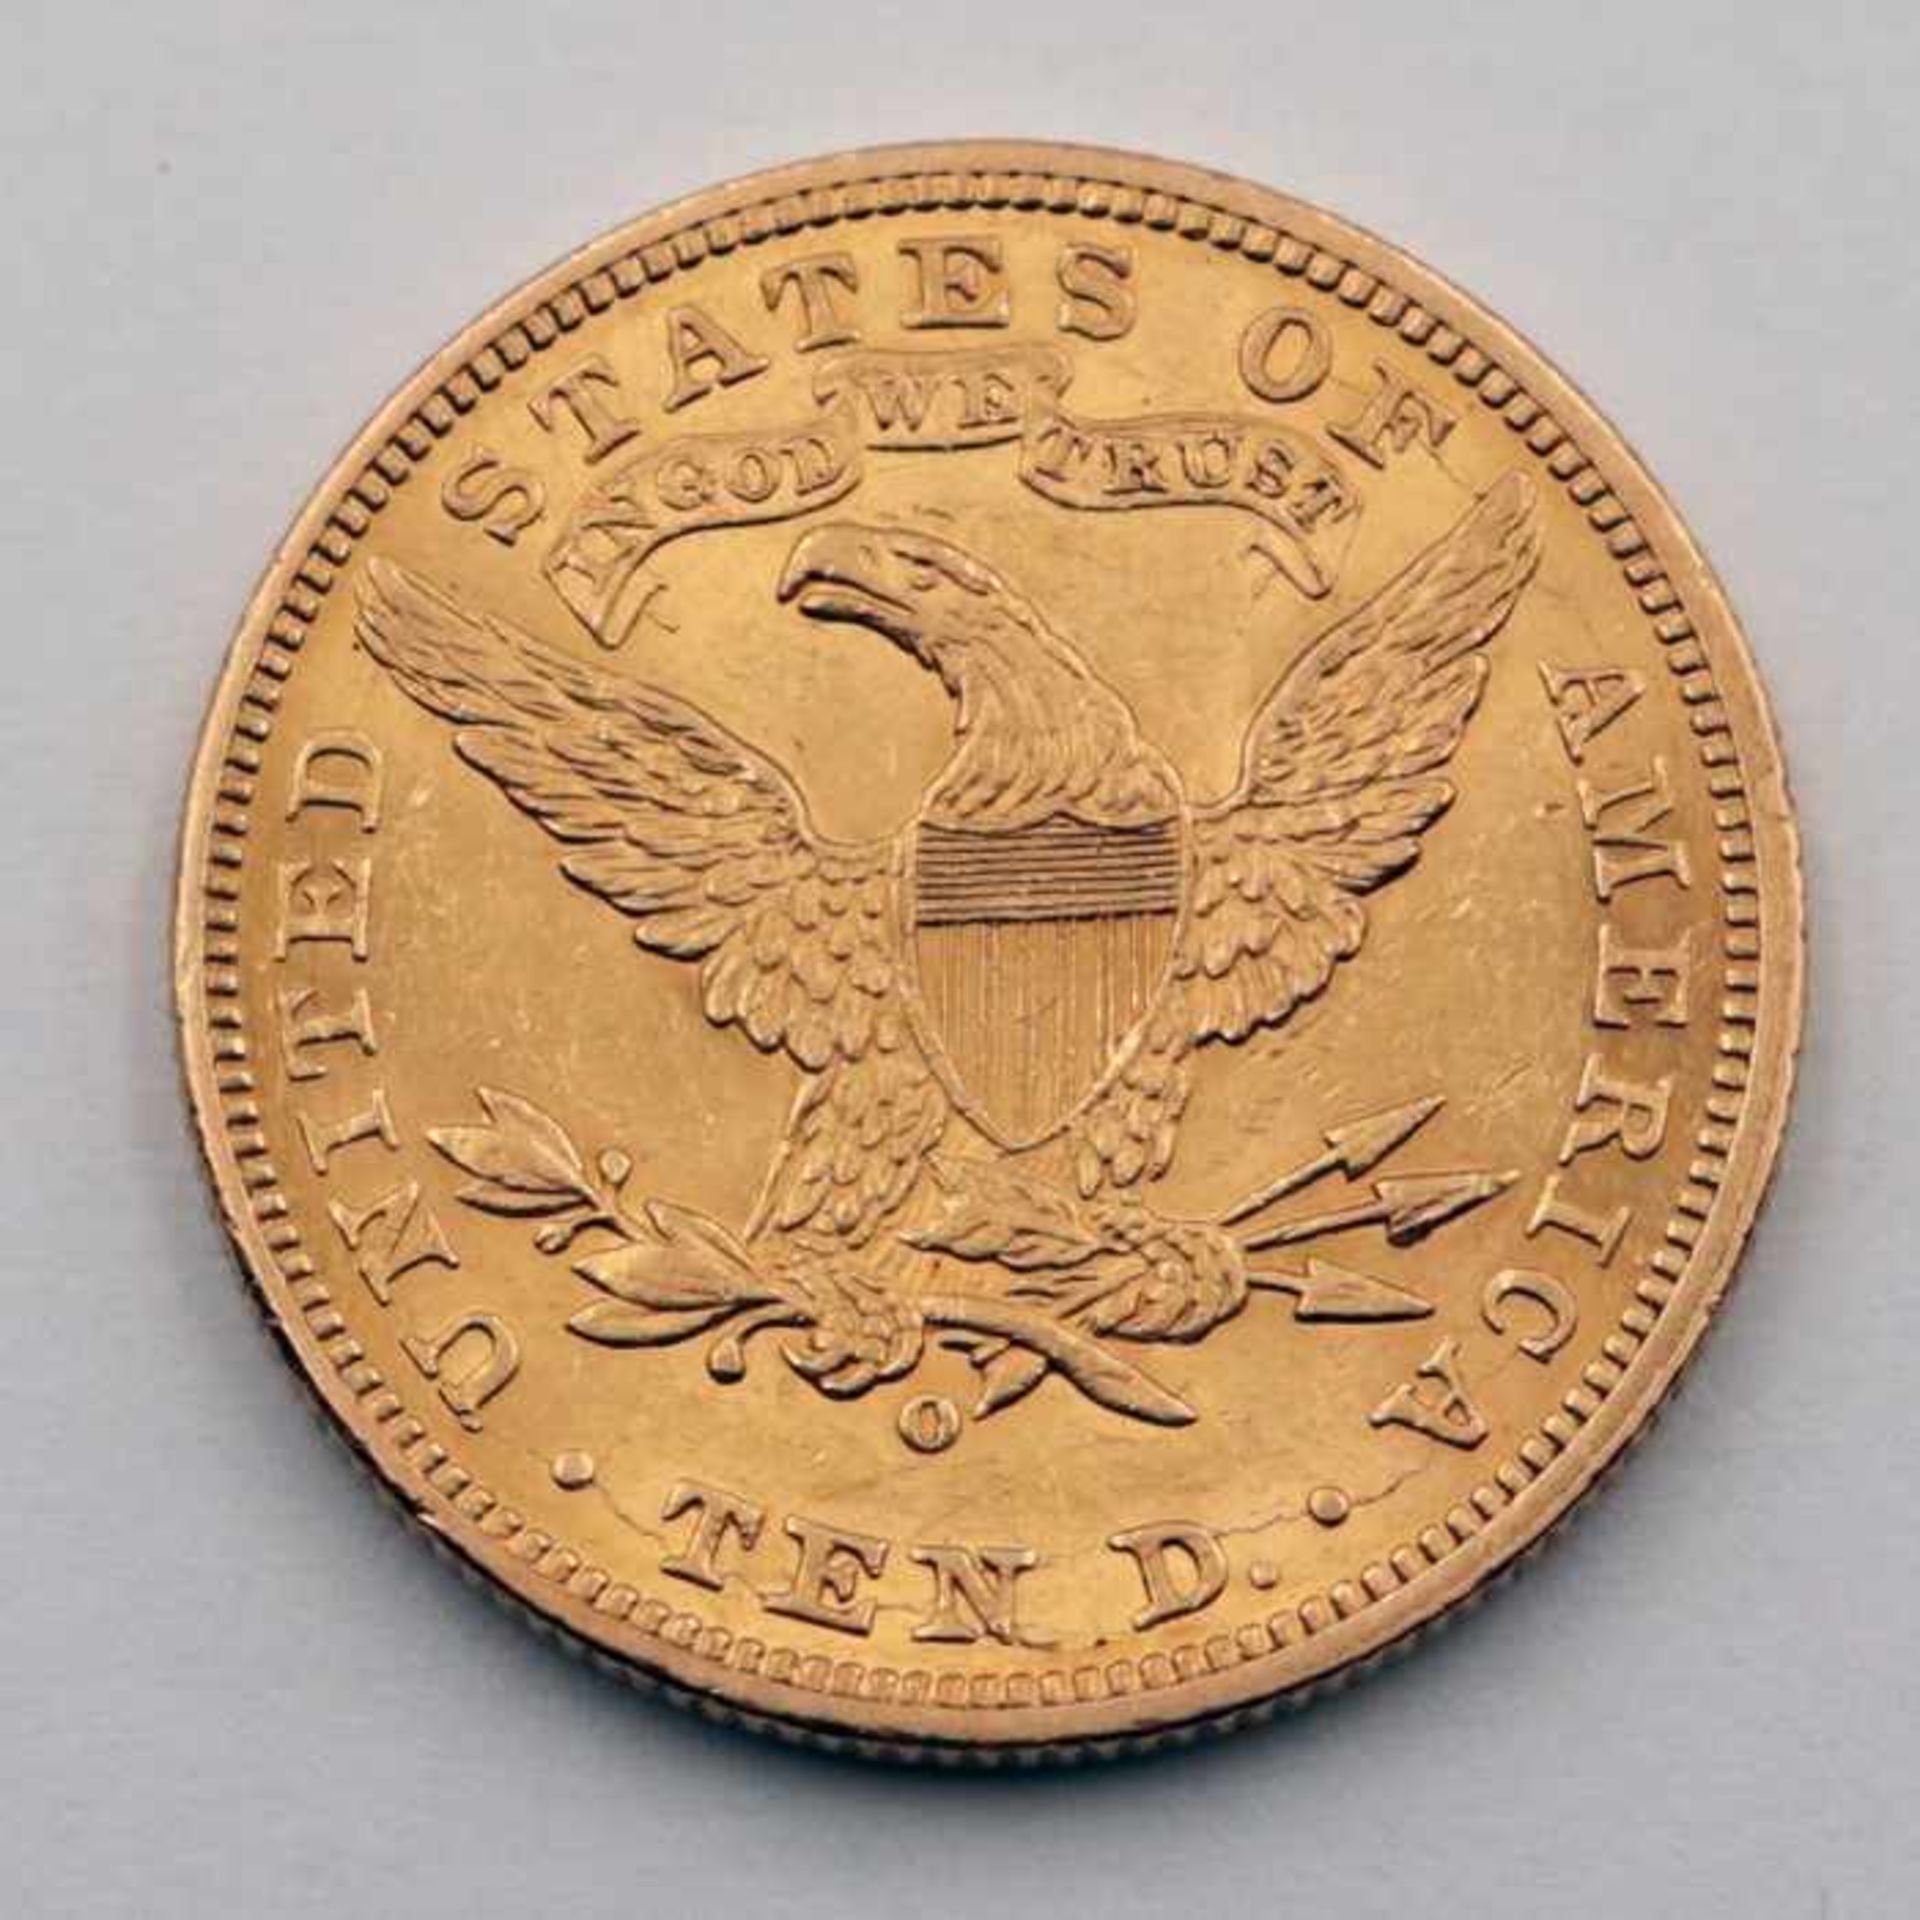 Goldmünze - 10 DollarUSA 1888, 900er Gold, G ca. 16,7 g, 1/2 Unze Feingold, Coroned Head / Eagle,